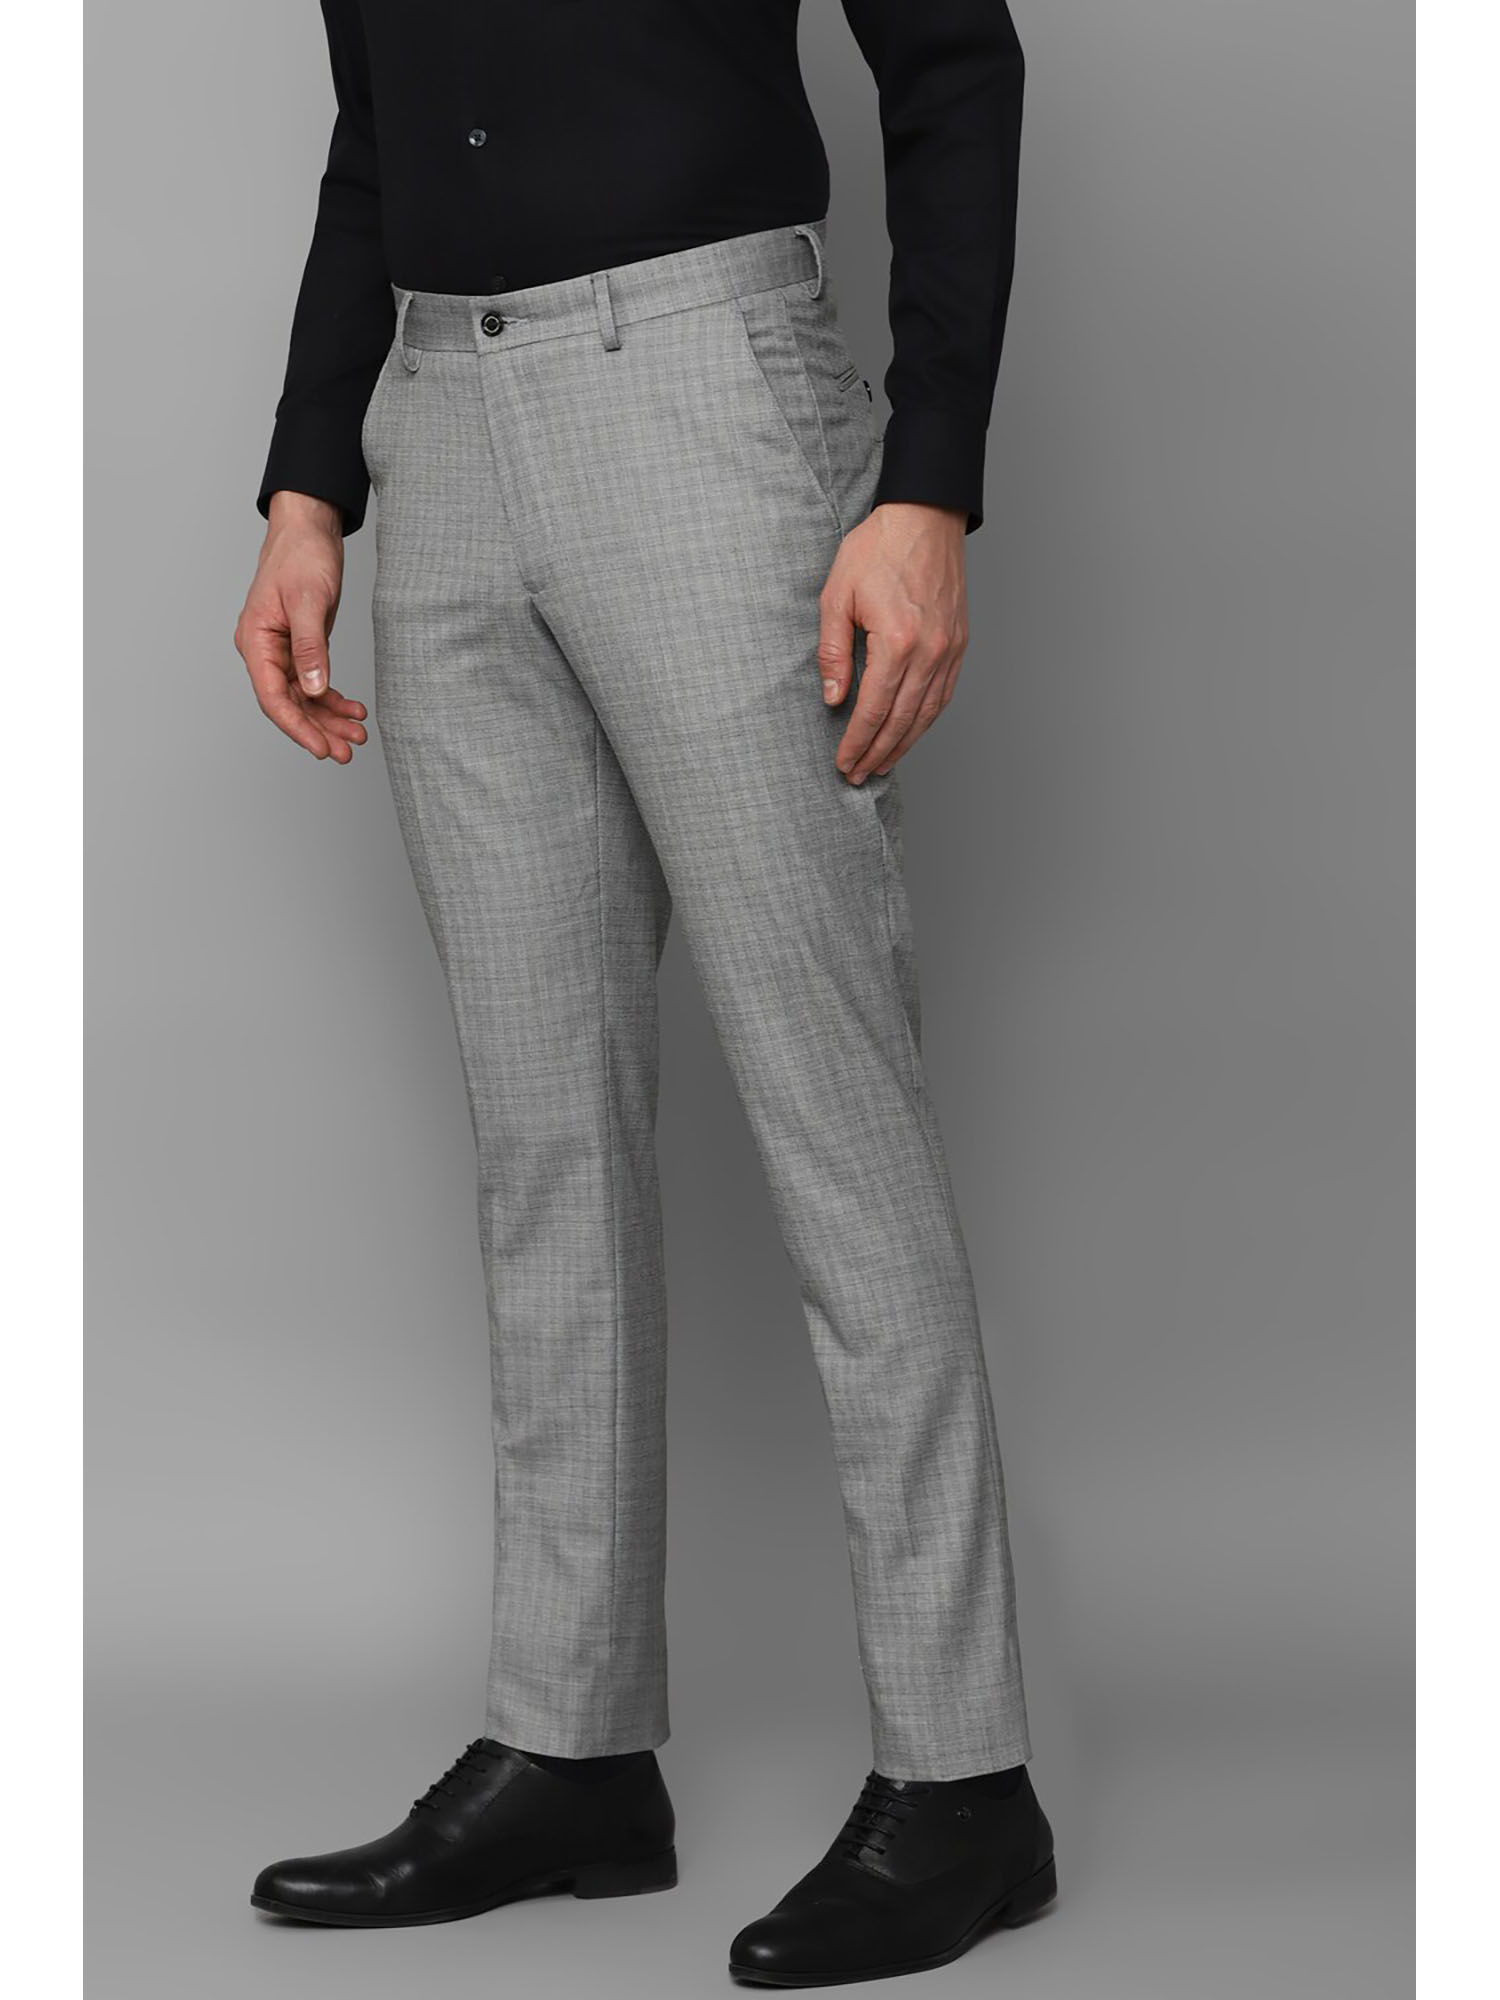 Houndstooth Men Track Pants, Black White Zip Pockets Quick Dry Mesh Li –  Starcove Fashion